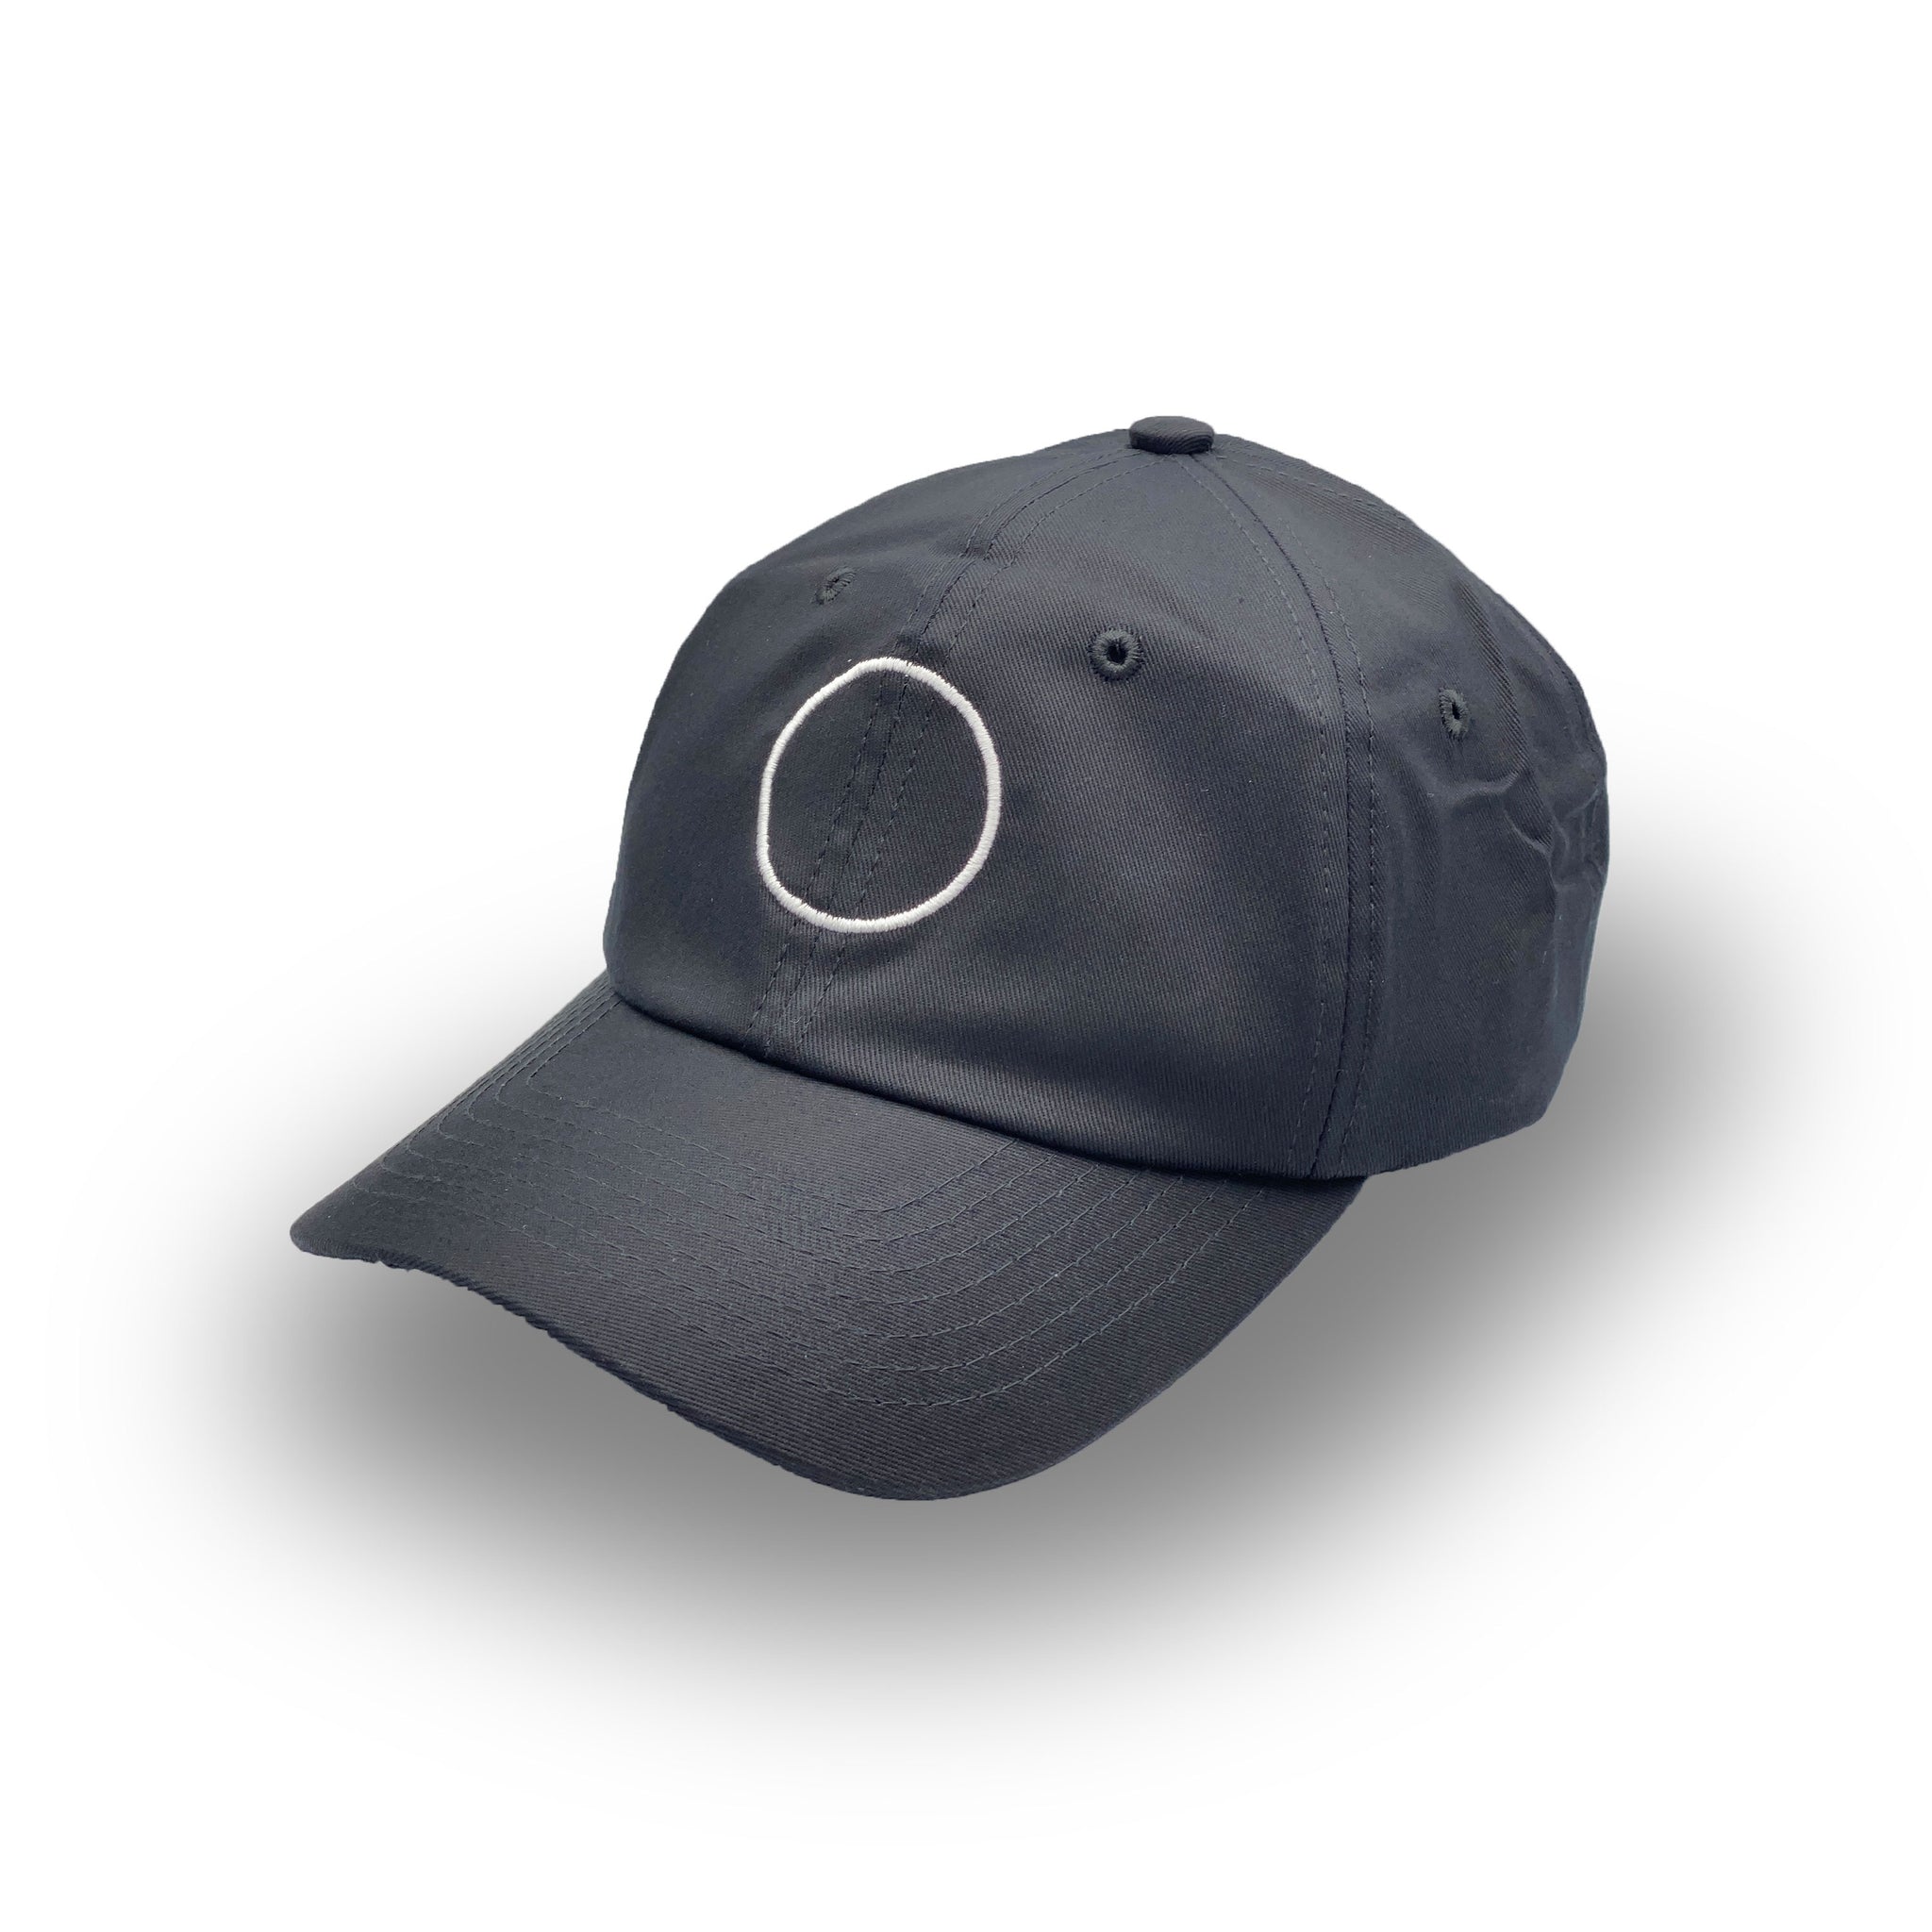 Frankly x Topiku recycled fabric baseball cap - black